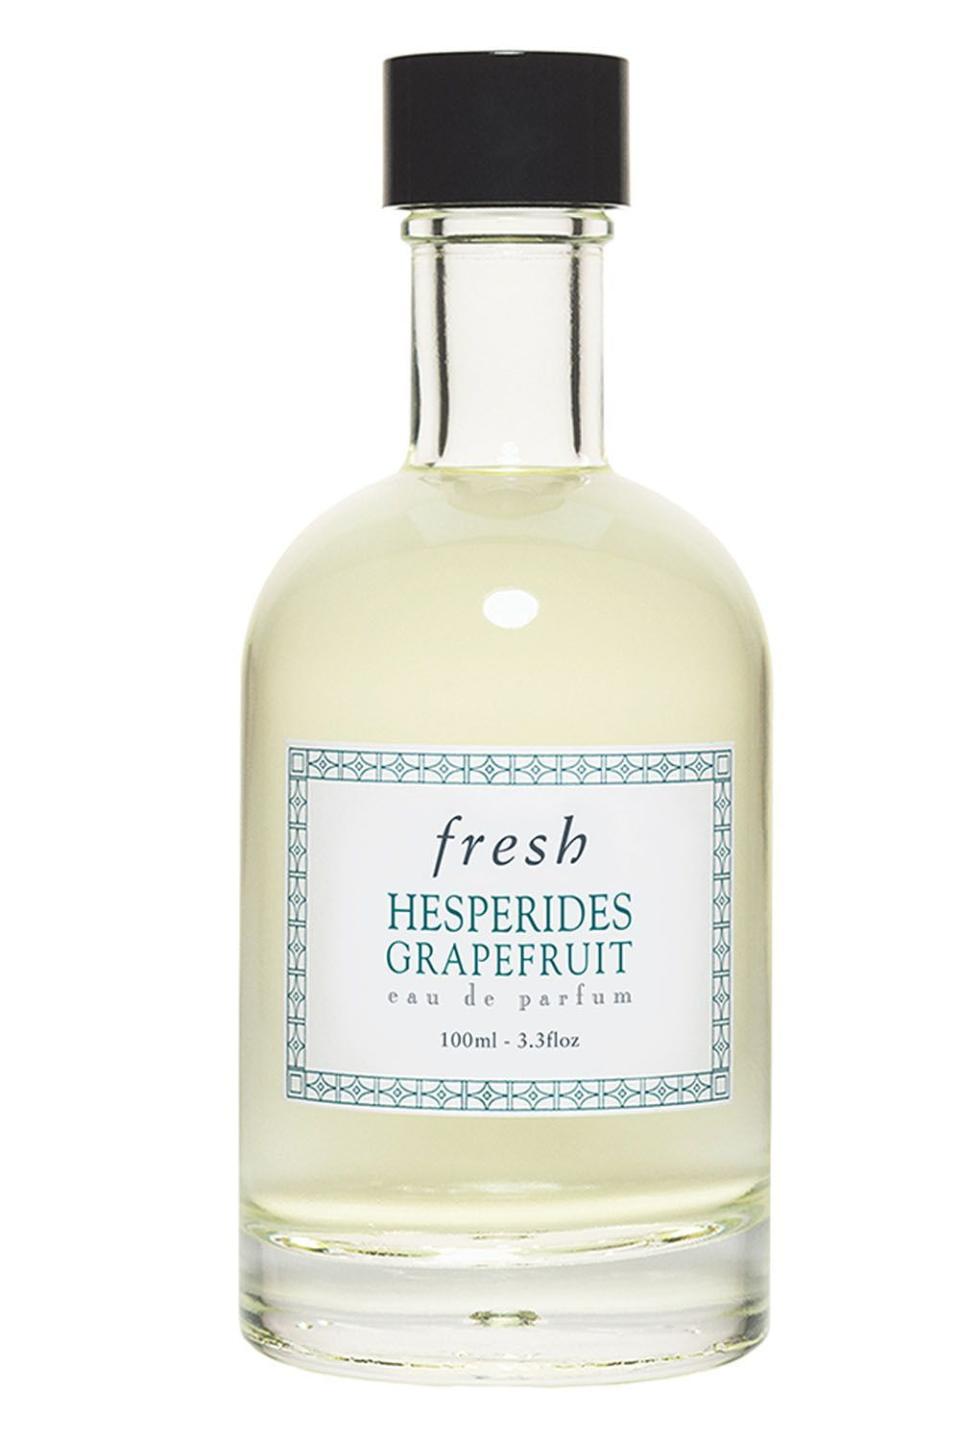 5) Fresh Hesperides Grapefruit Eau de Parfum